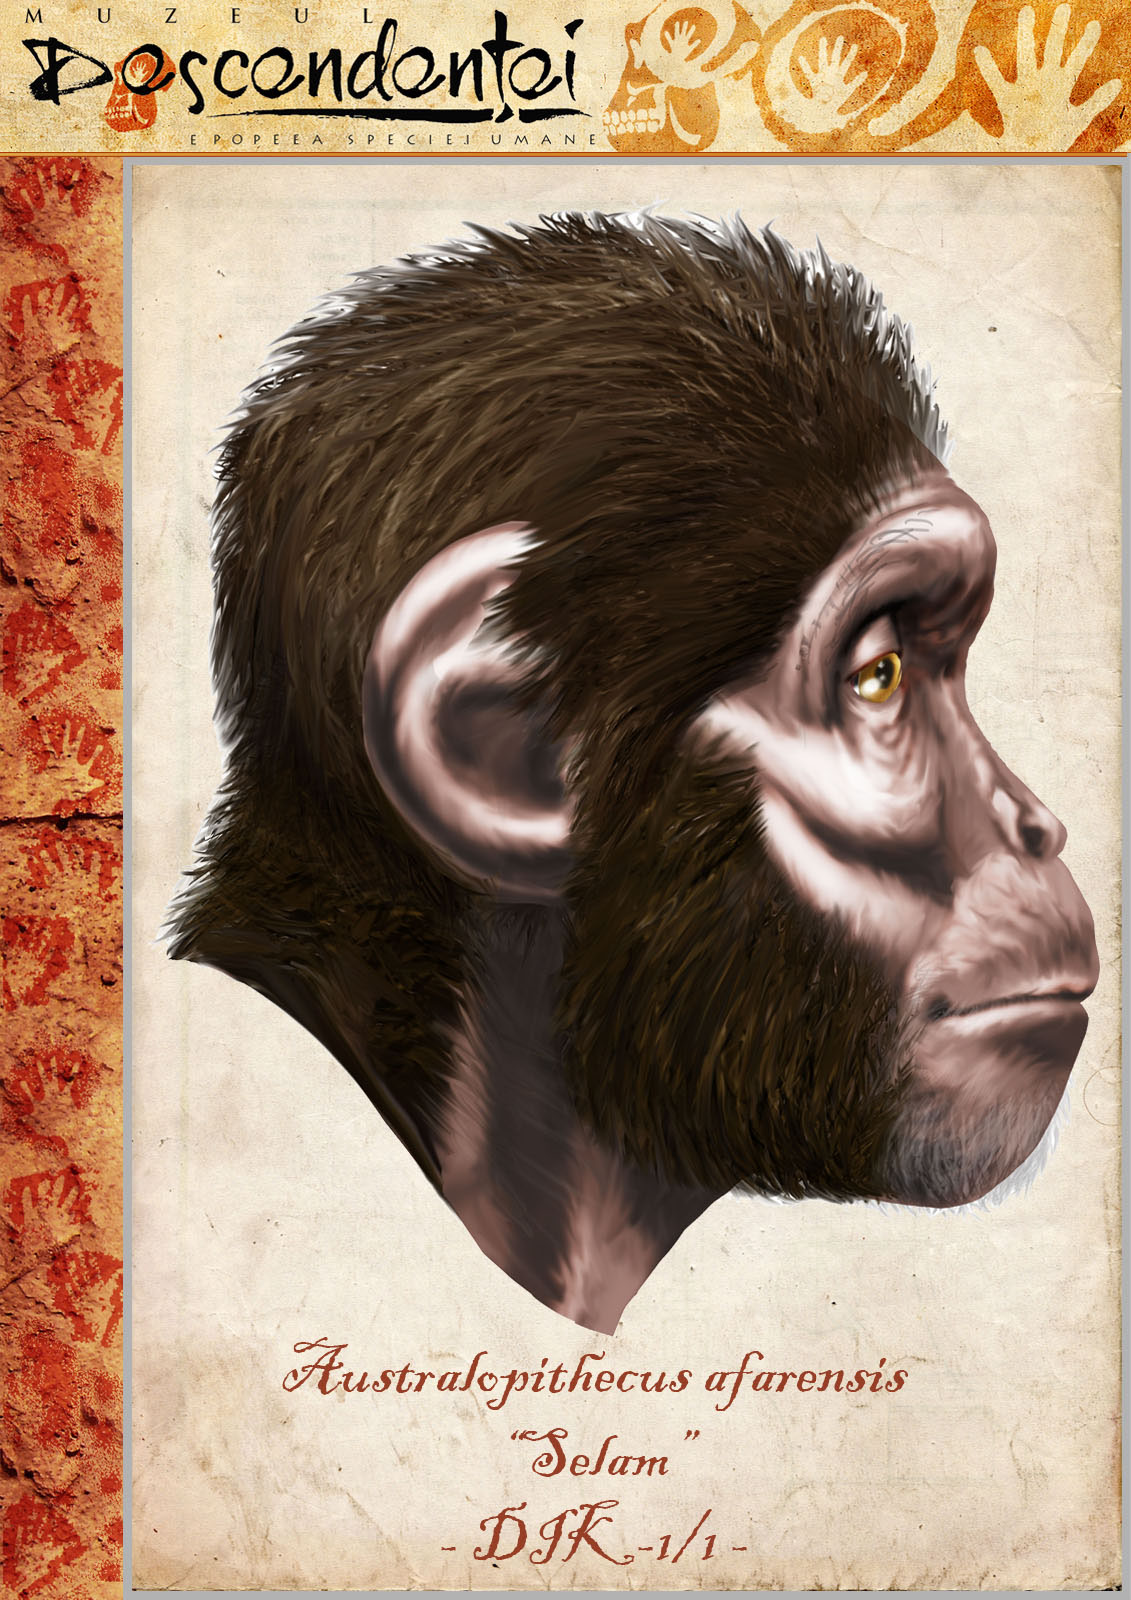 australopithecus afarensis selam dikika human evolution homo hominid sahelanthropus ardipithecus paranthropus habilis erectus ergaster floresiensis